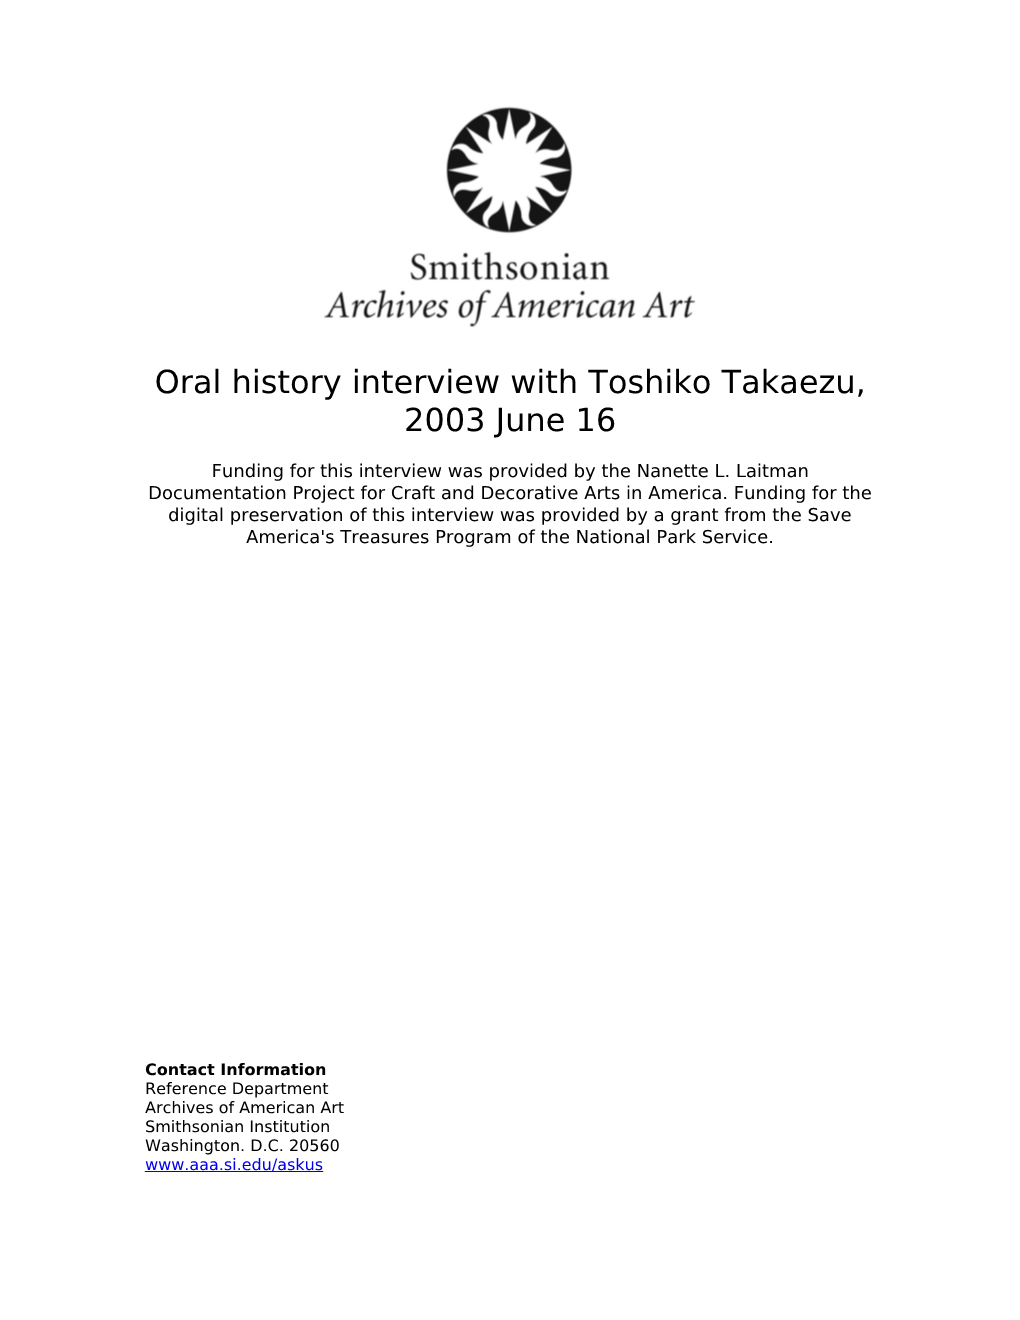 Oral History Interview with Toshiko Takaezu, 2003 June 16